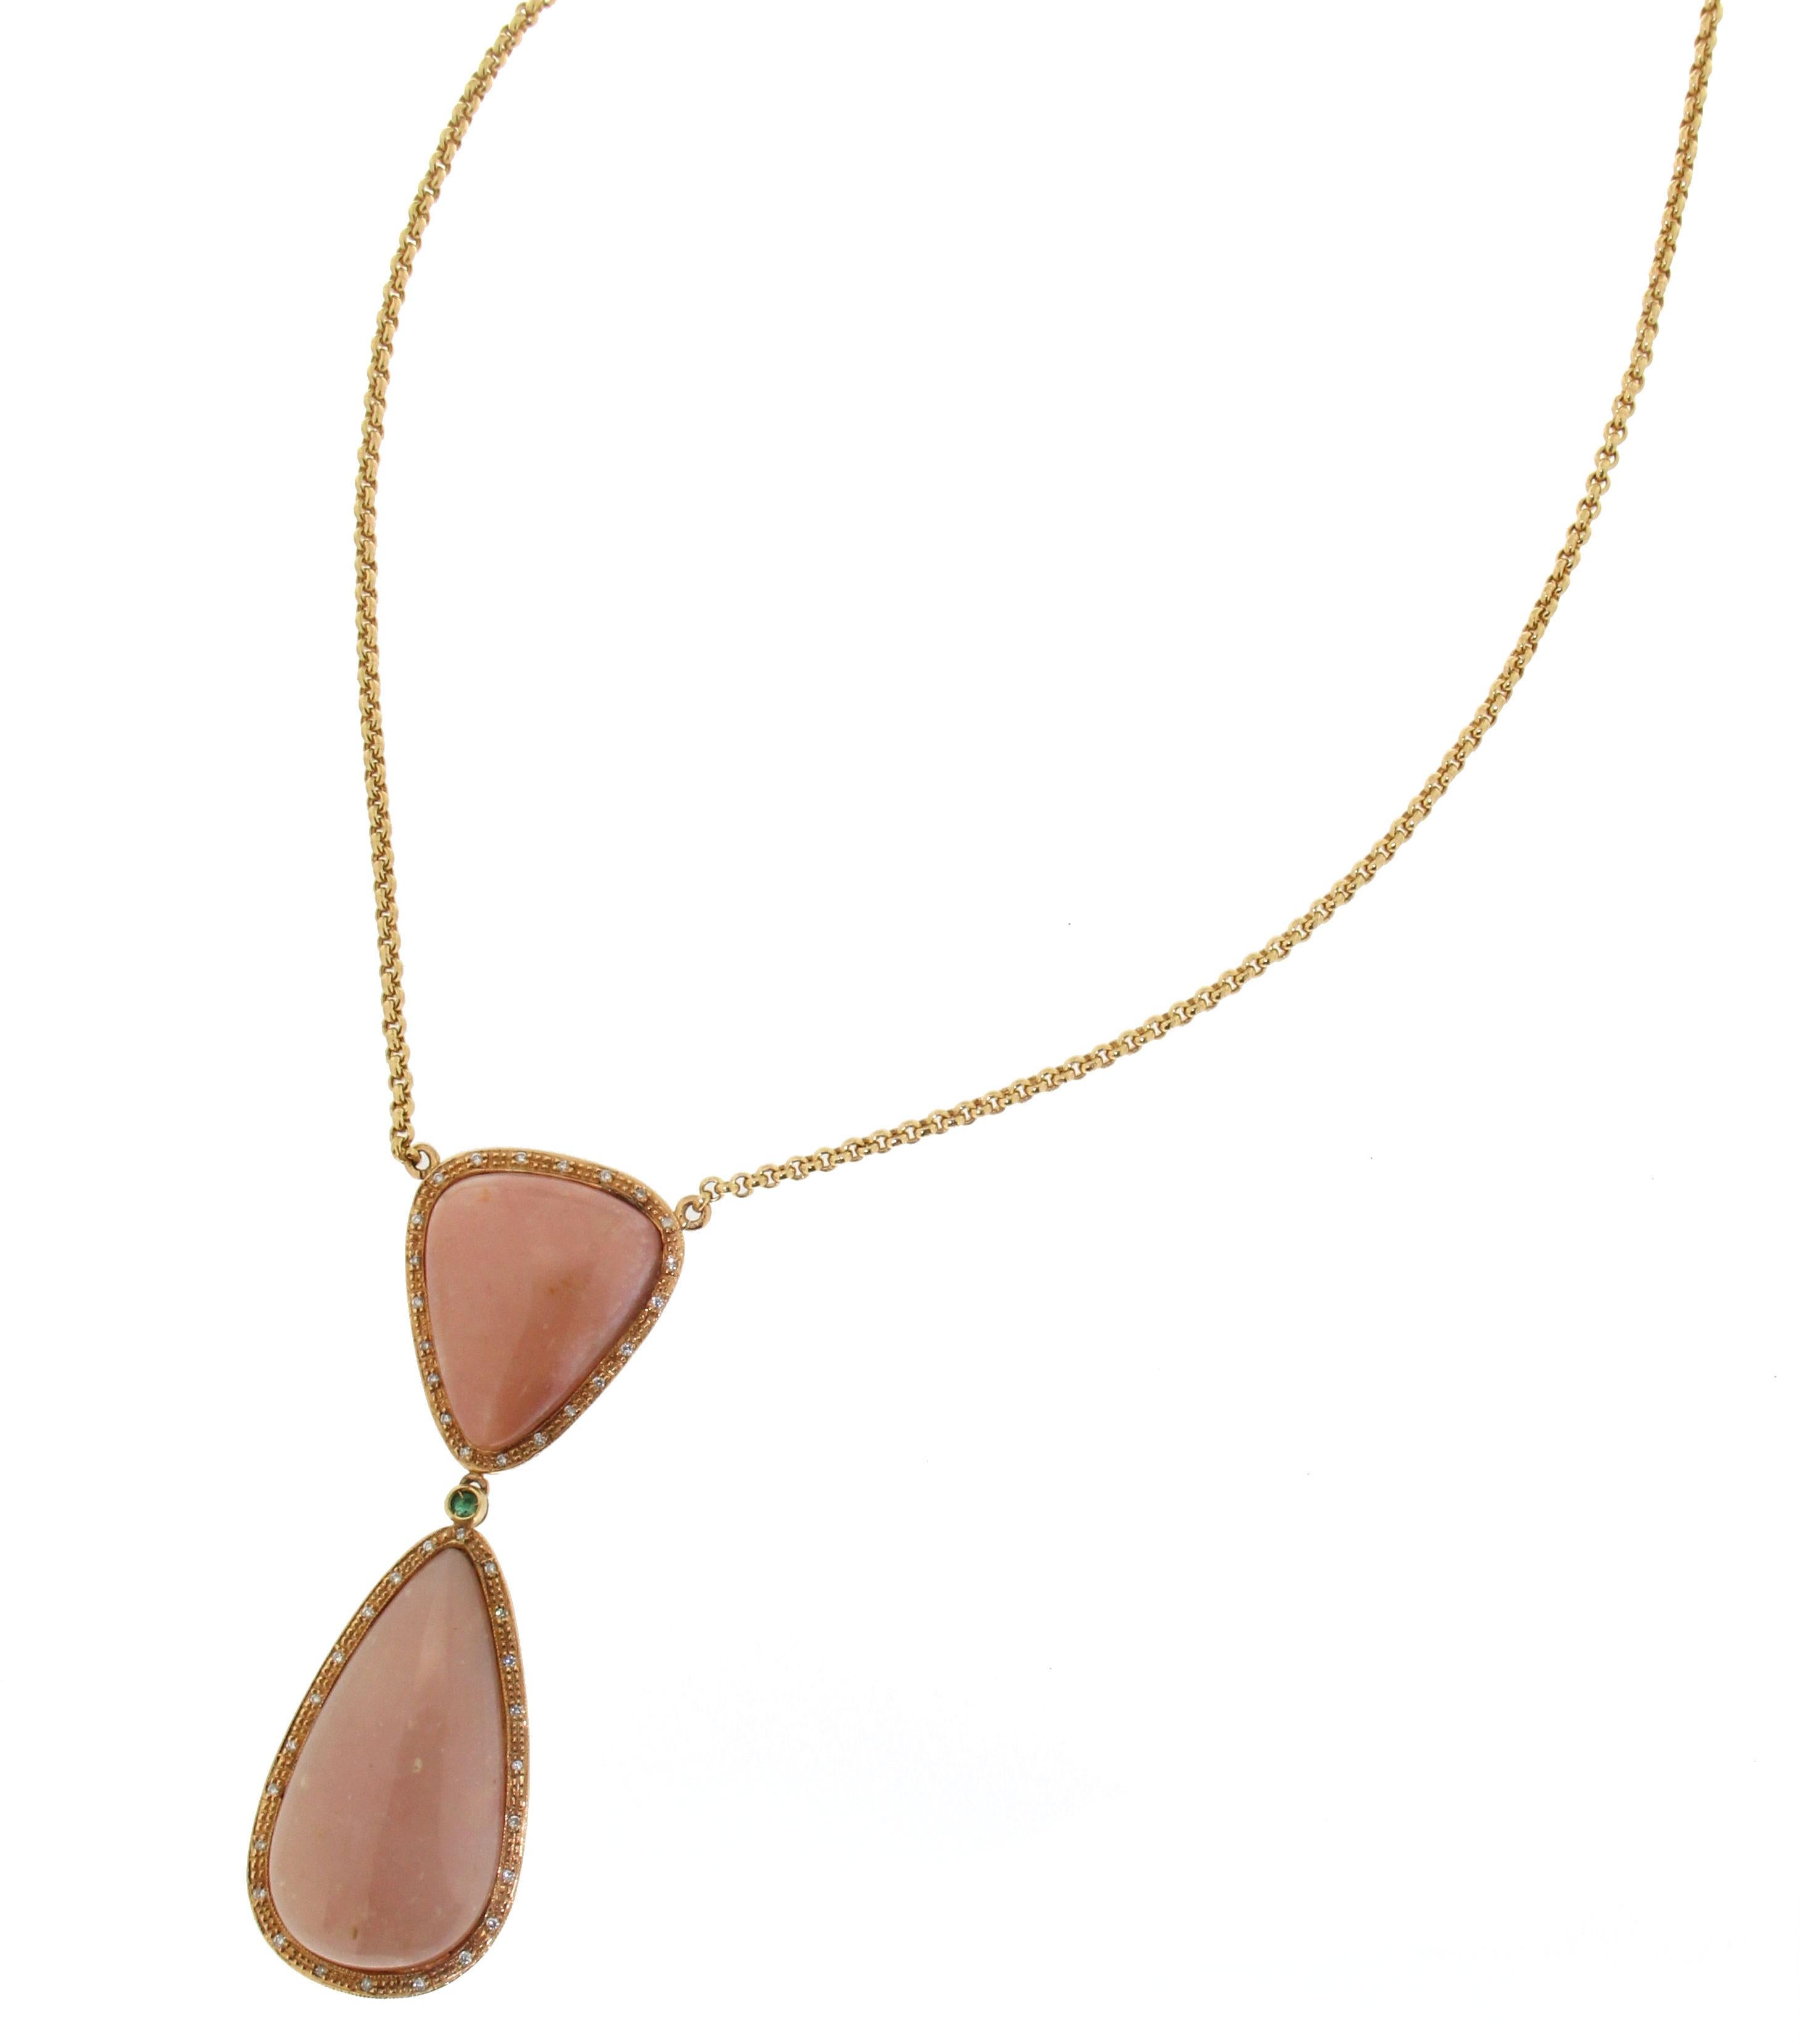 Brilliant Cut Handcraft Pink Opal 18 Karat Yellow Gold Diamonds Pendant Necklace